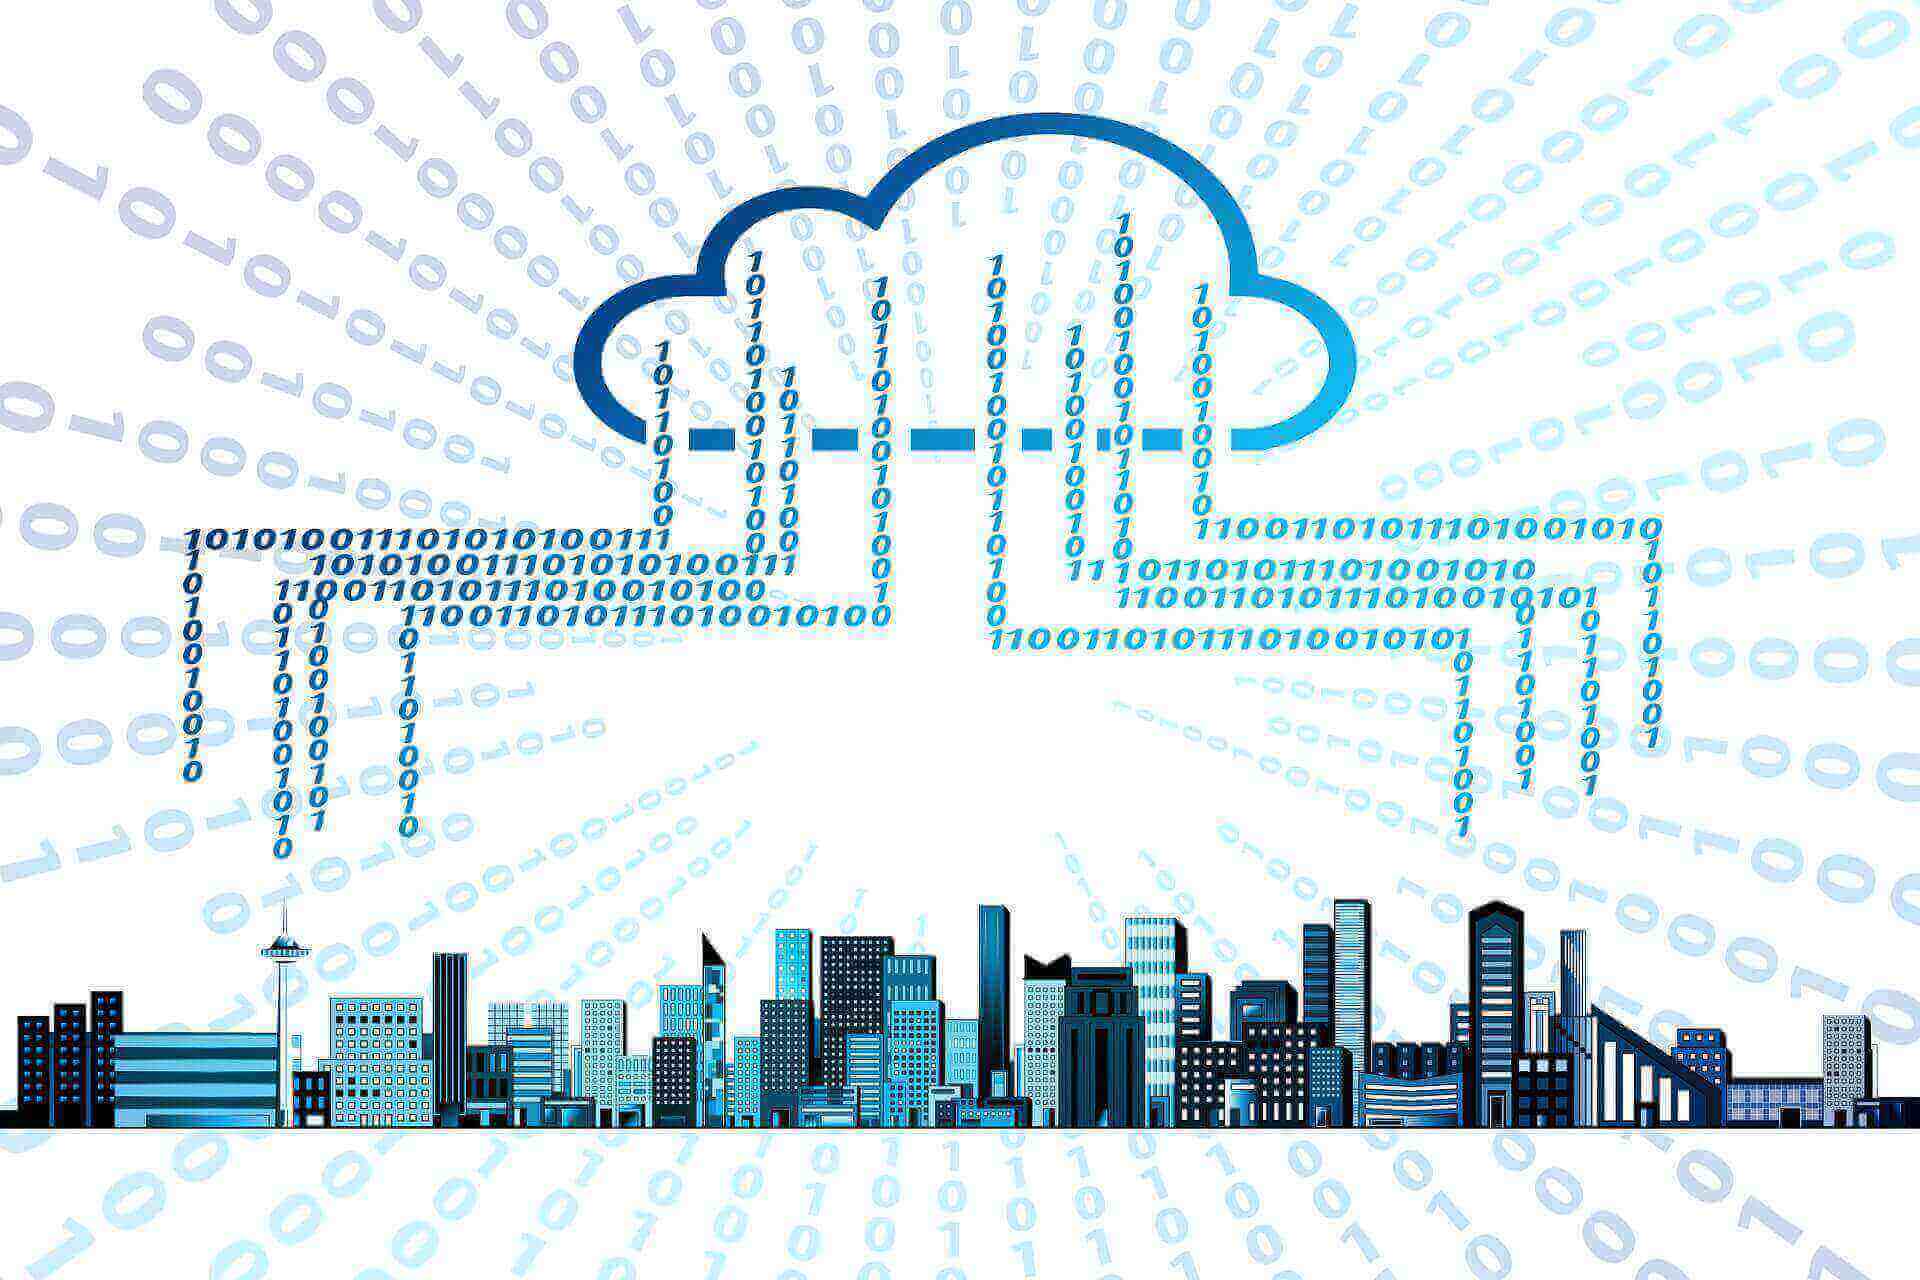 Companies Enhancing Cloud Computing in Higher Education